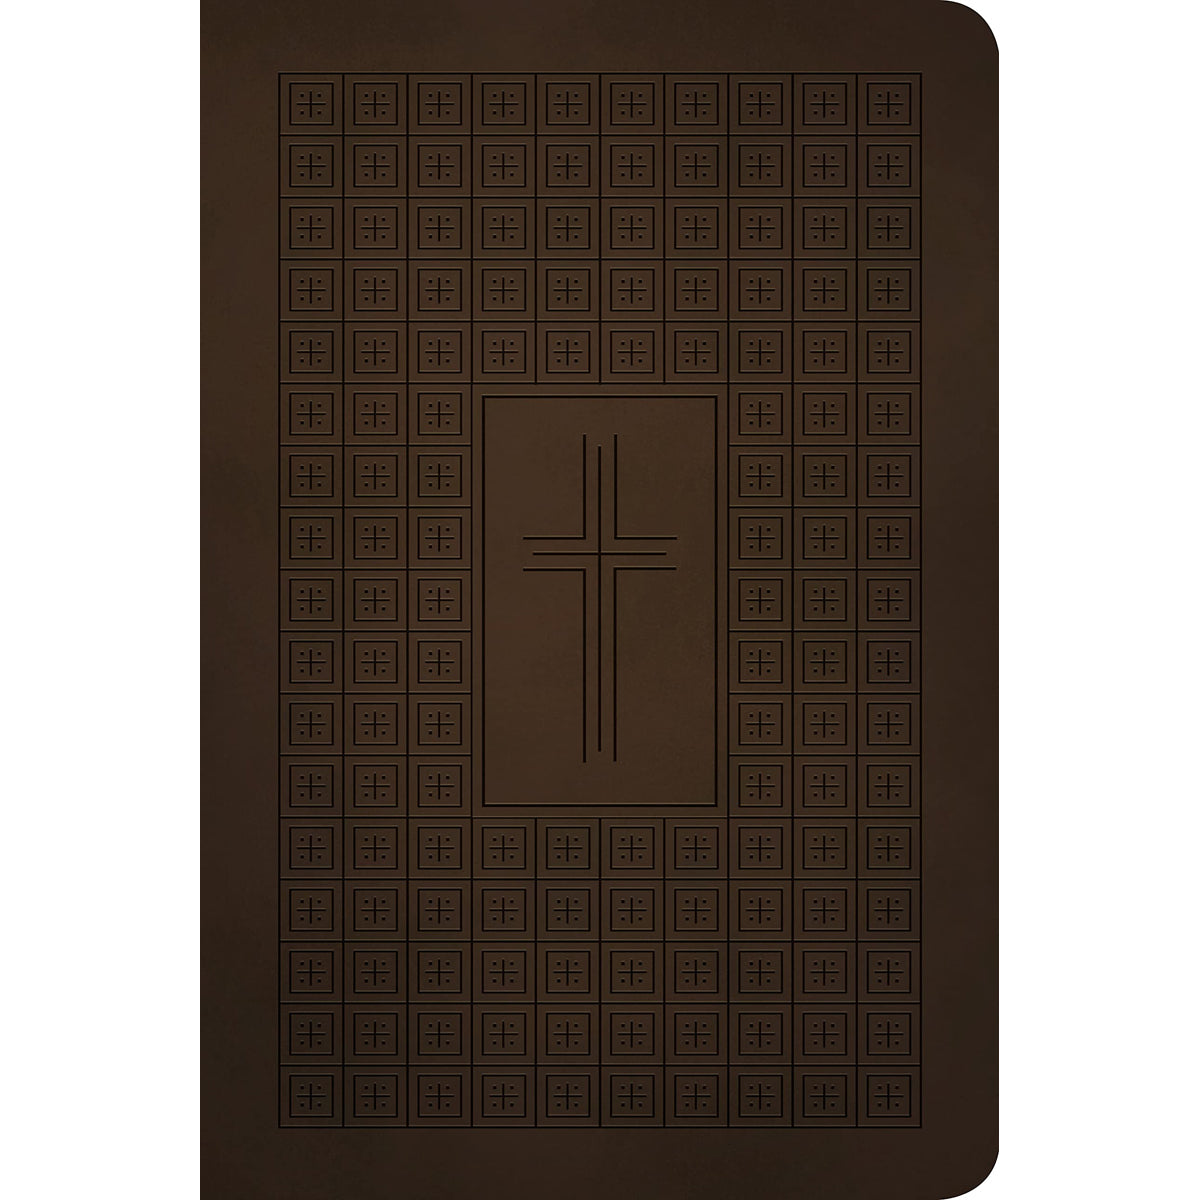 NLT Filament Premium Value Thinline Bible, Dark Brown Cross (Imitation Leather)